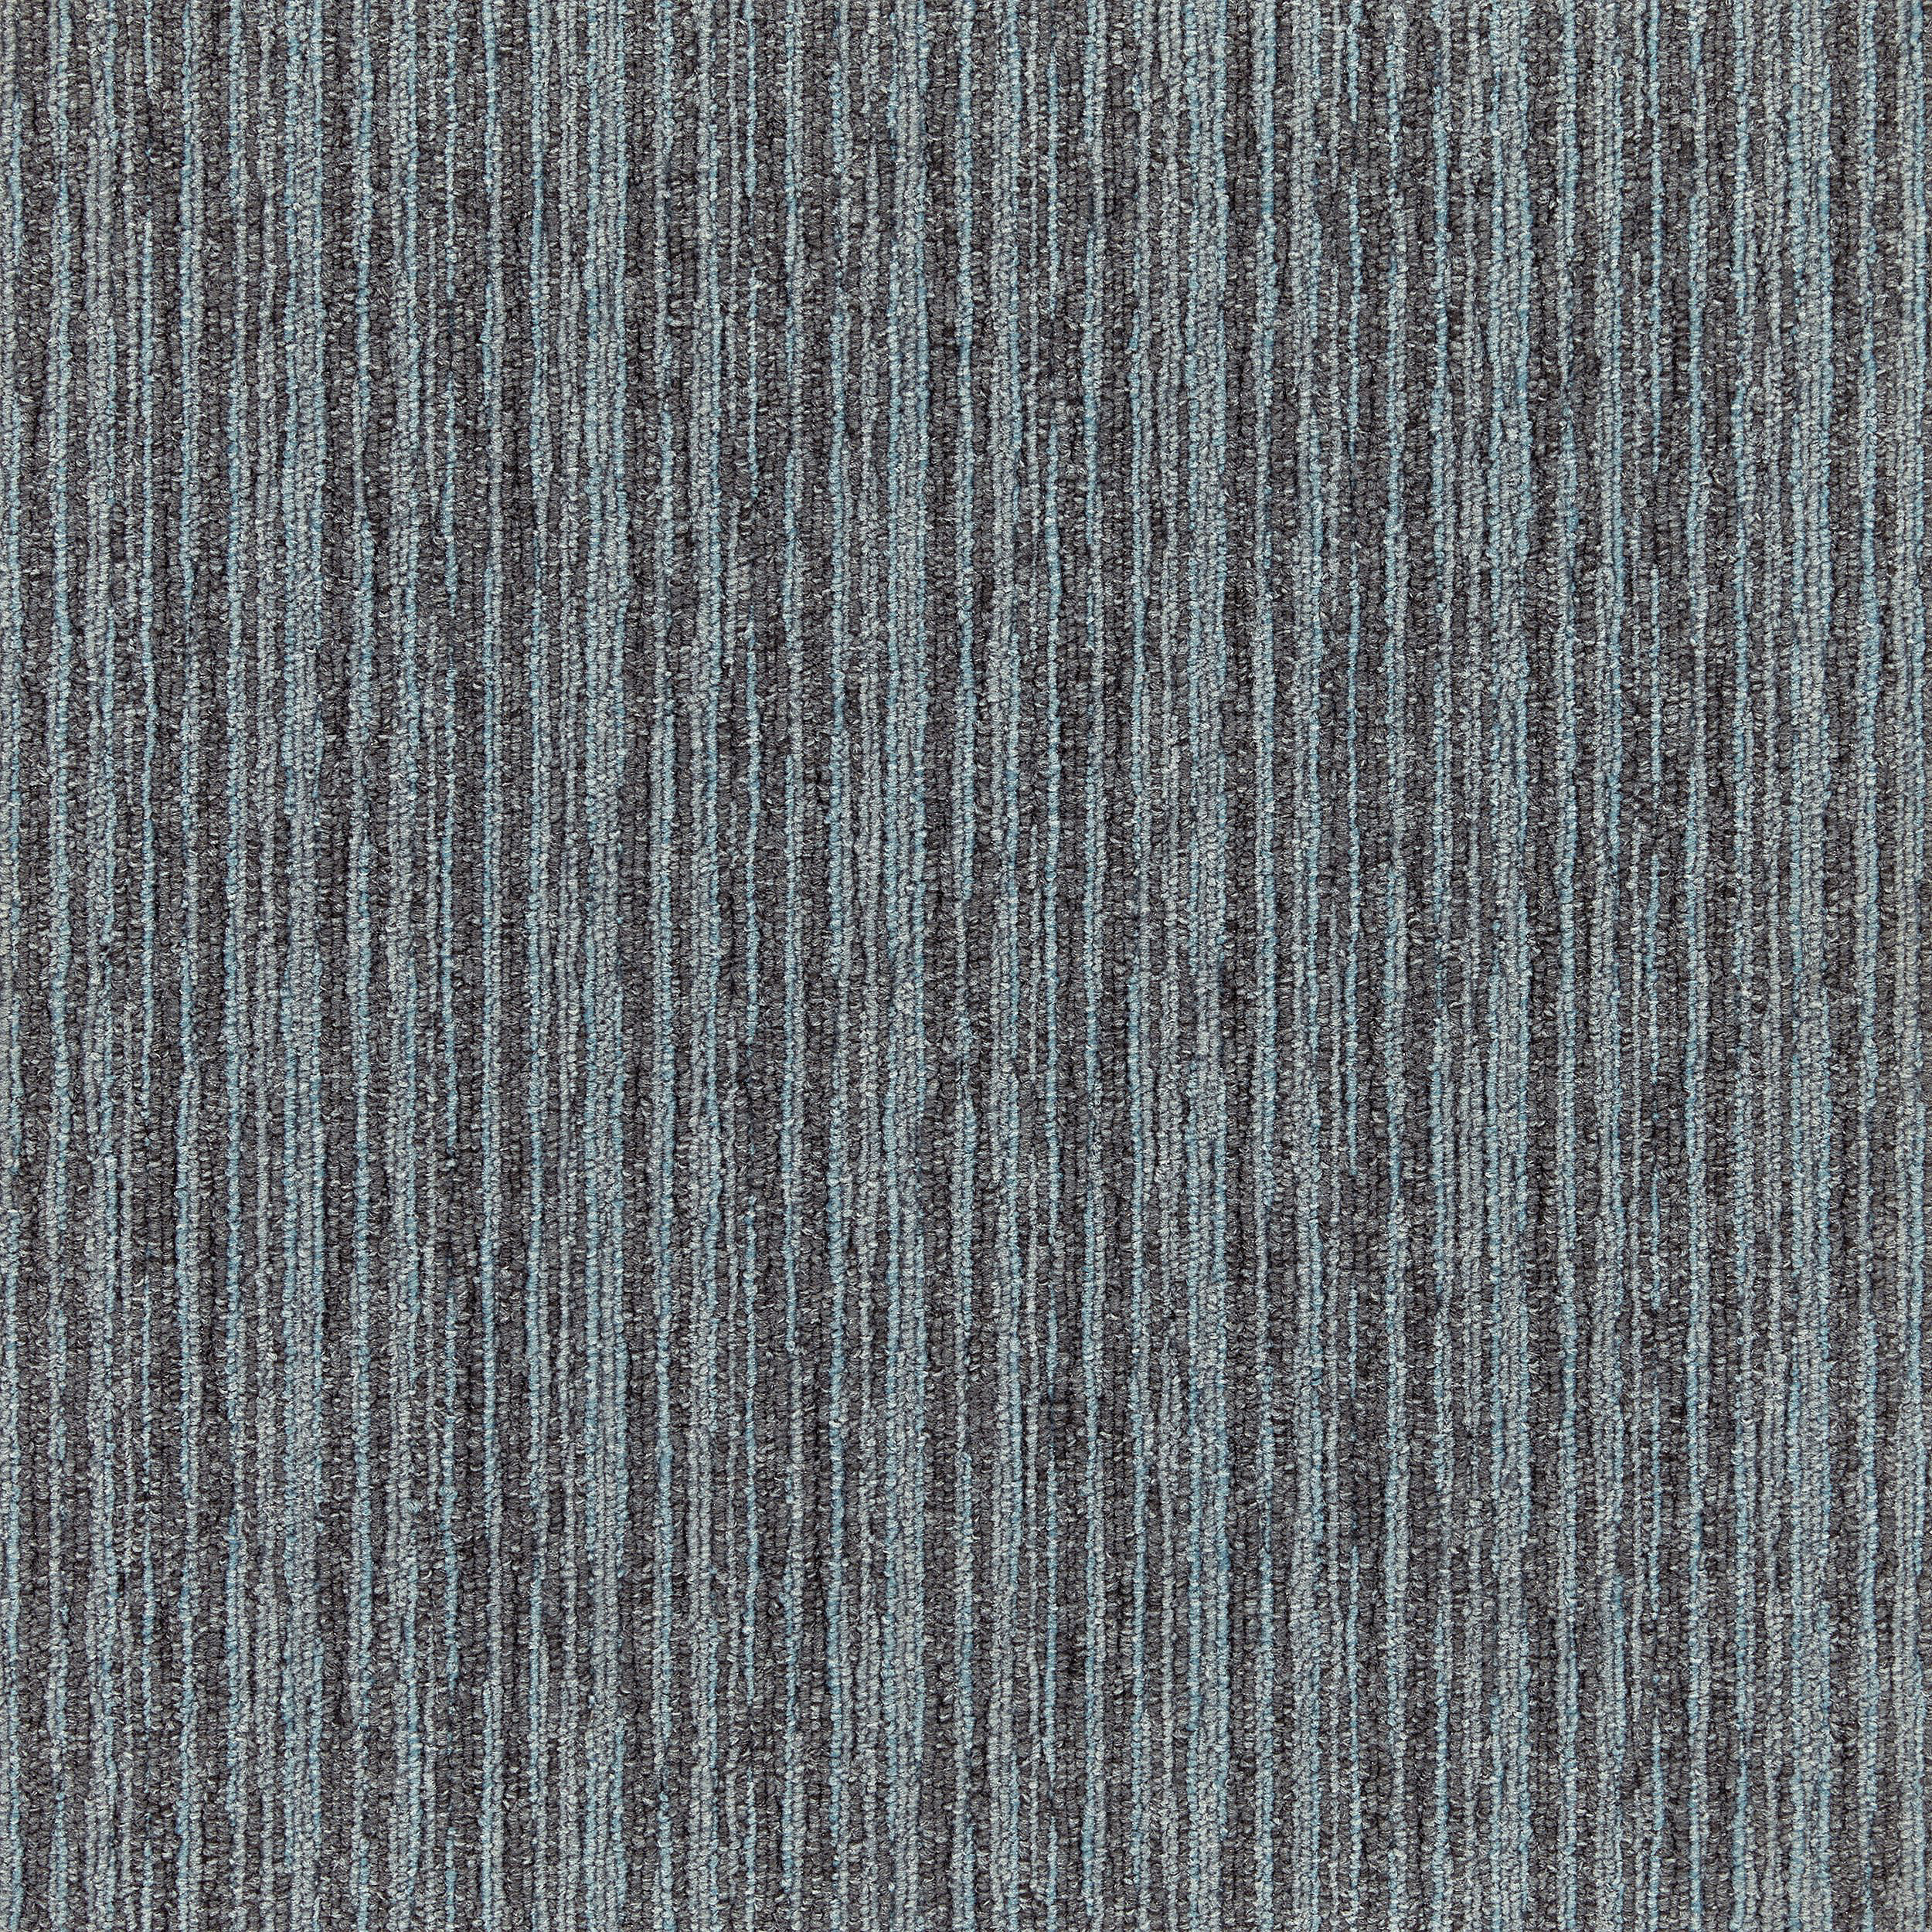 Yuton 105 Carpet Tile In Ice afbeeldingnummer 4